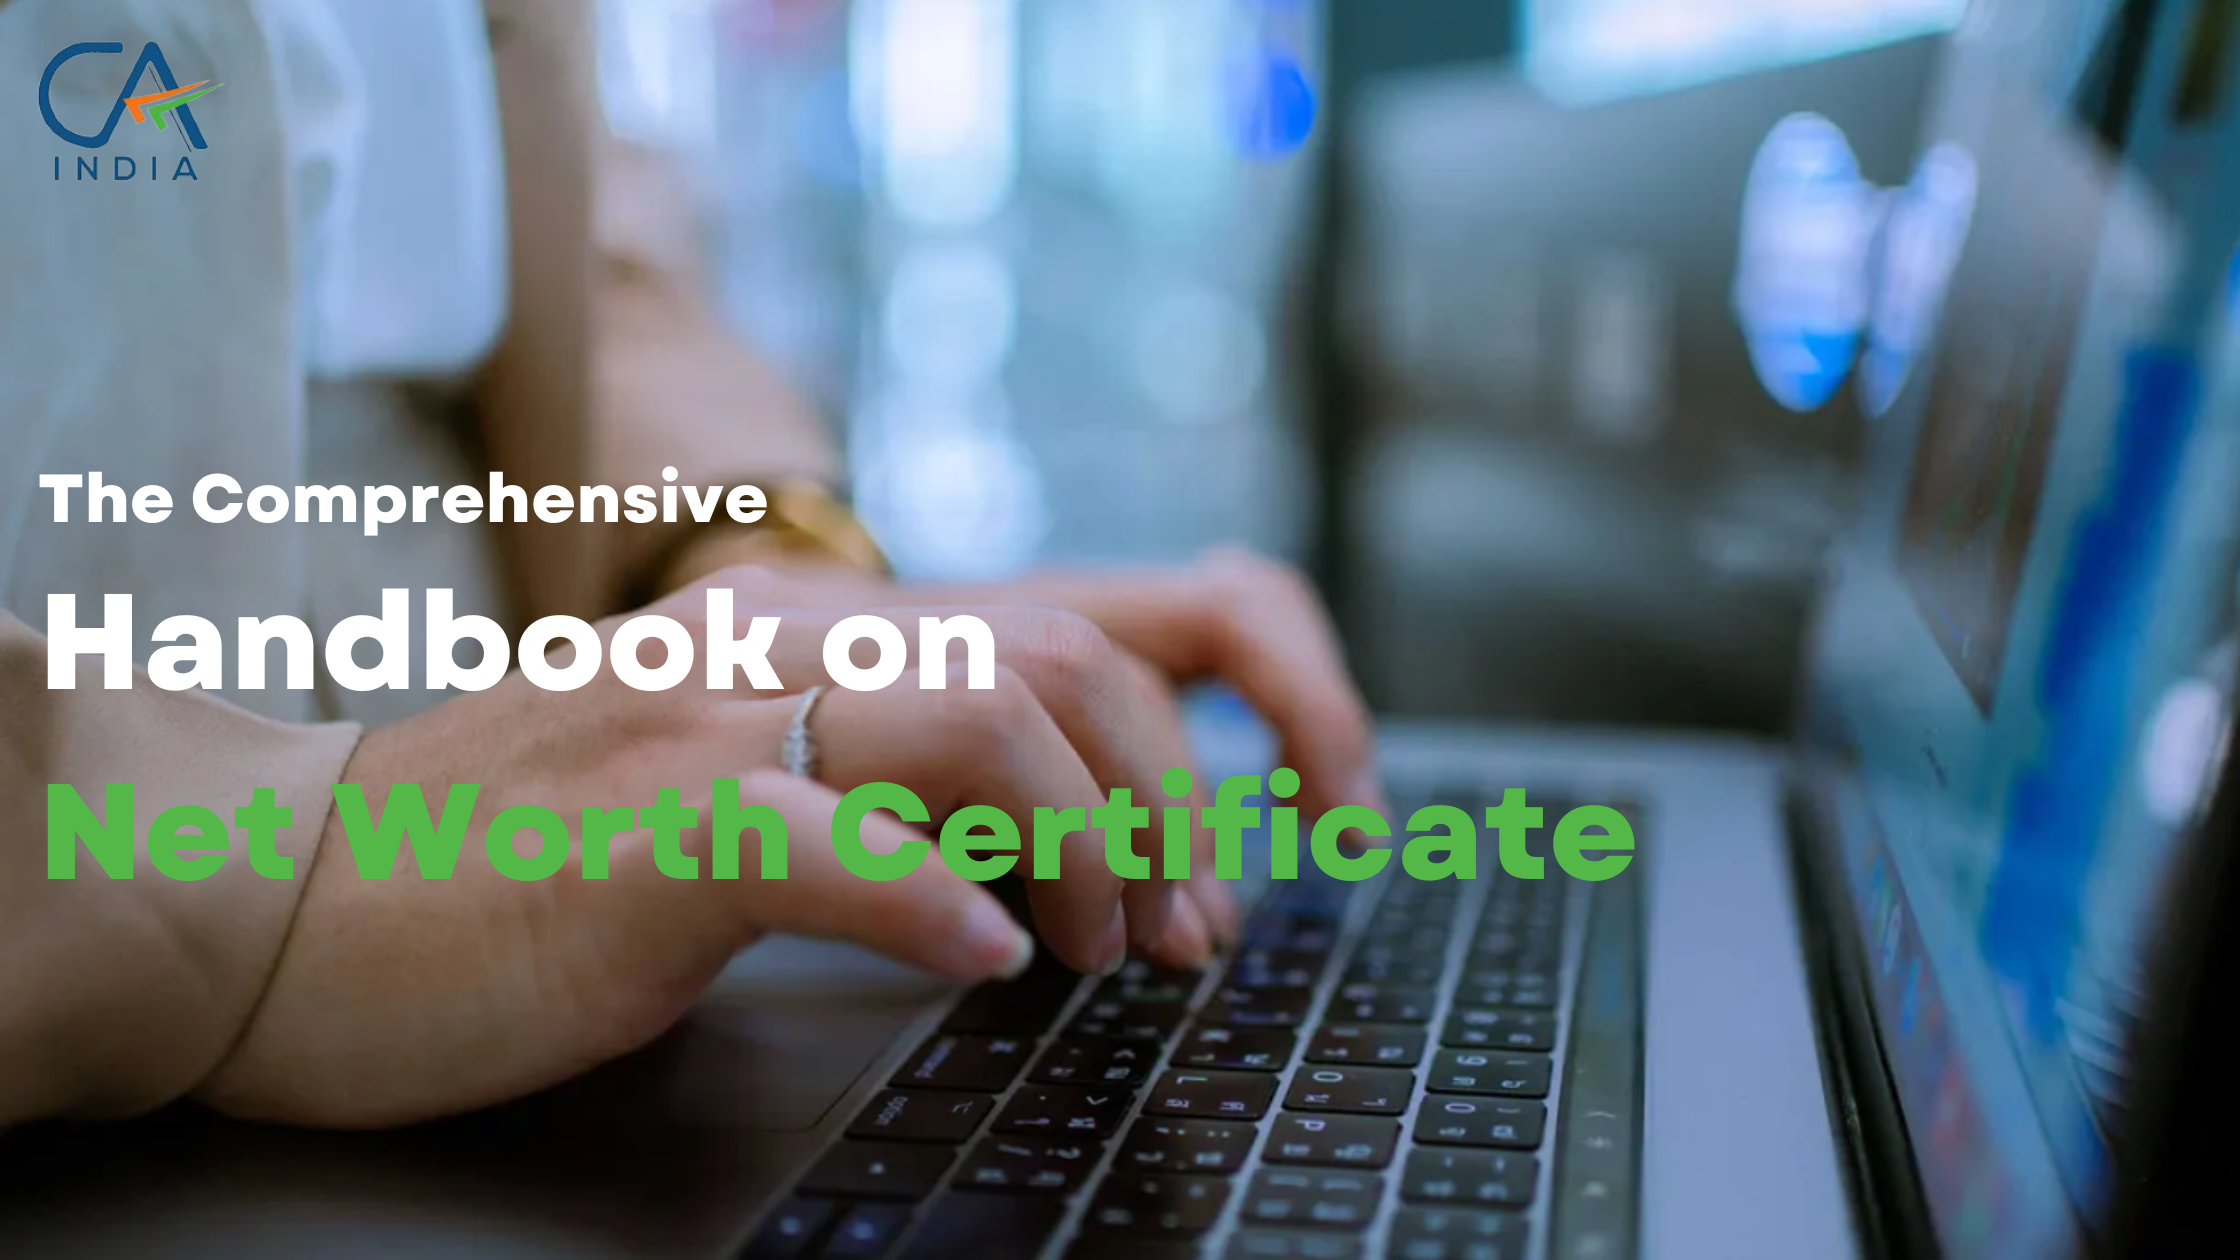 The Comprehensive Handbook on Net Worth Certificate